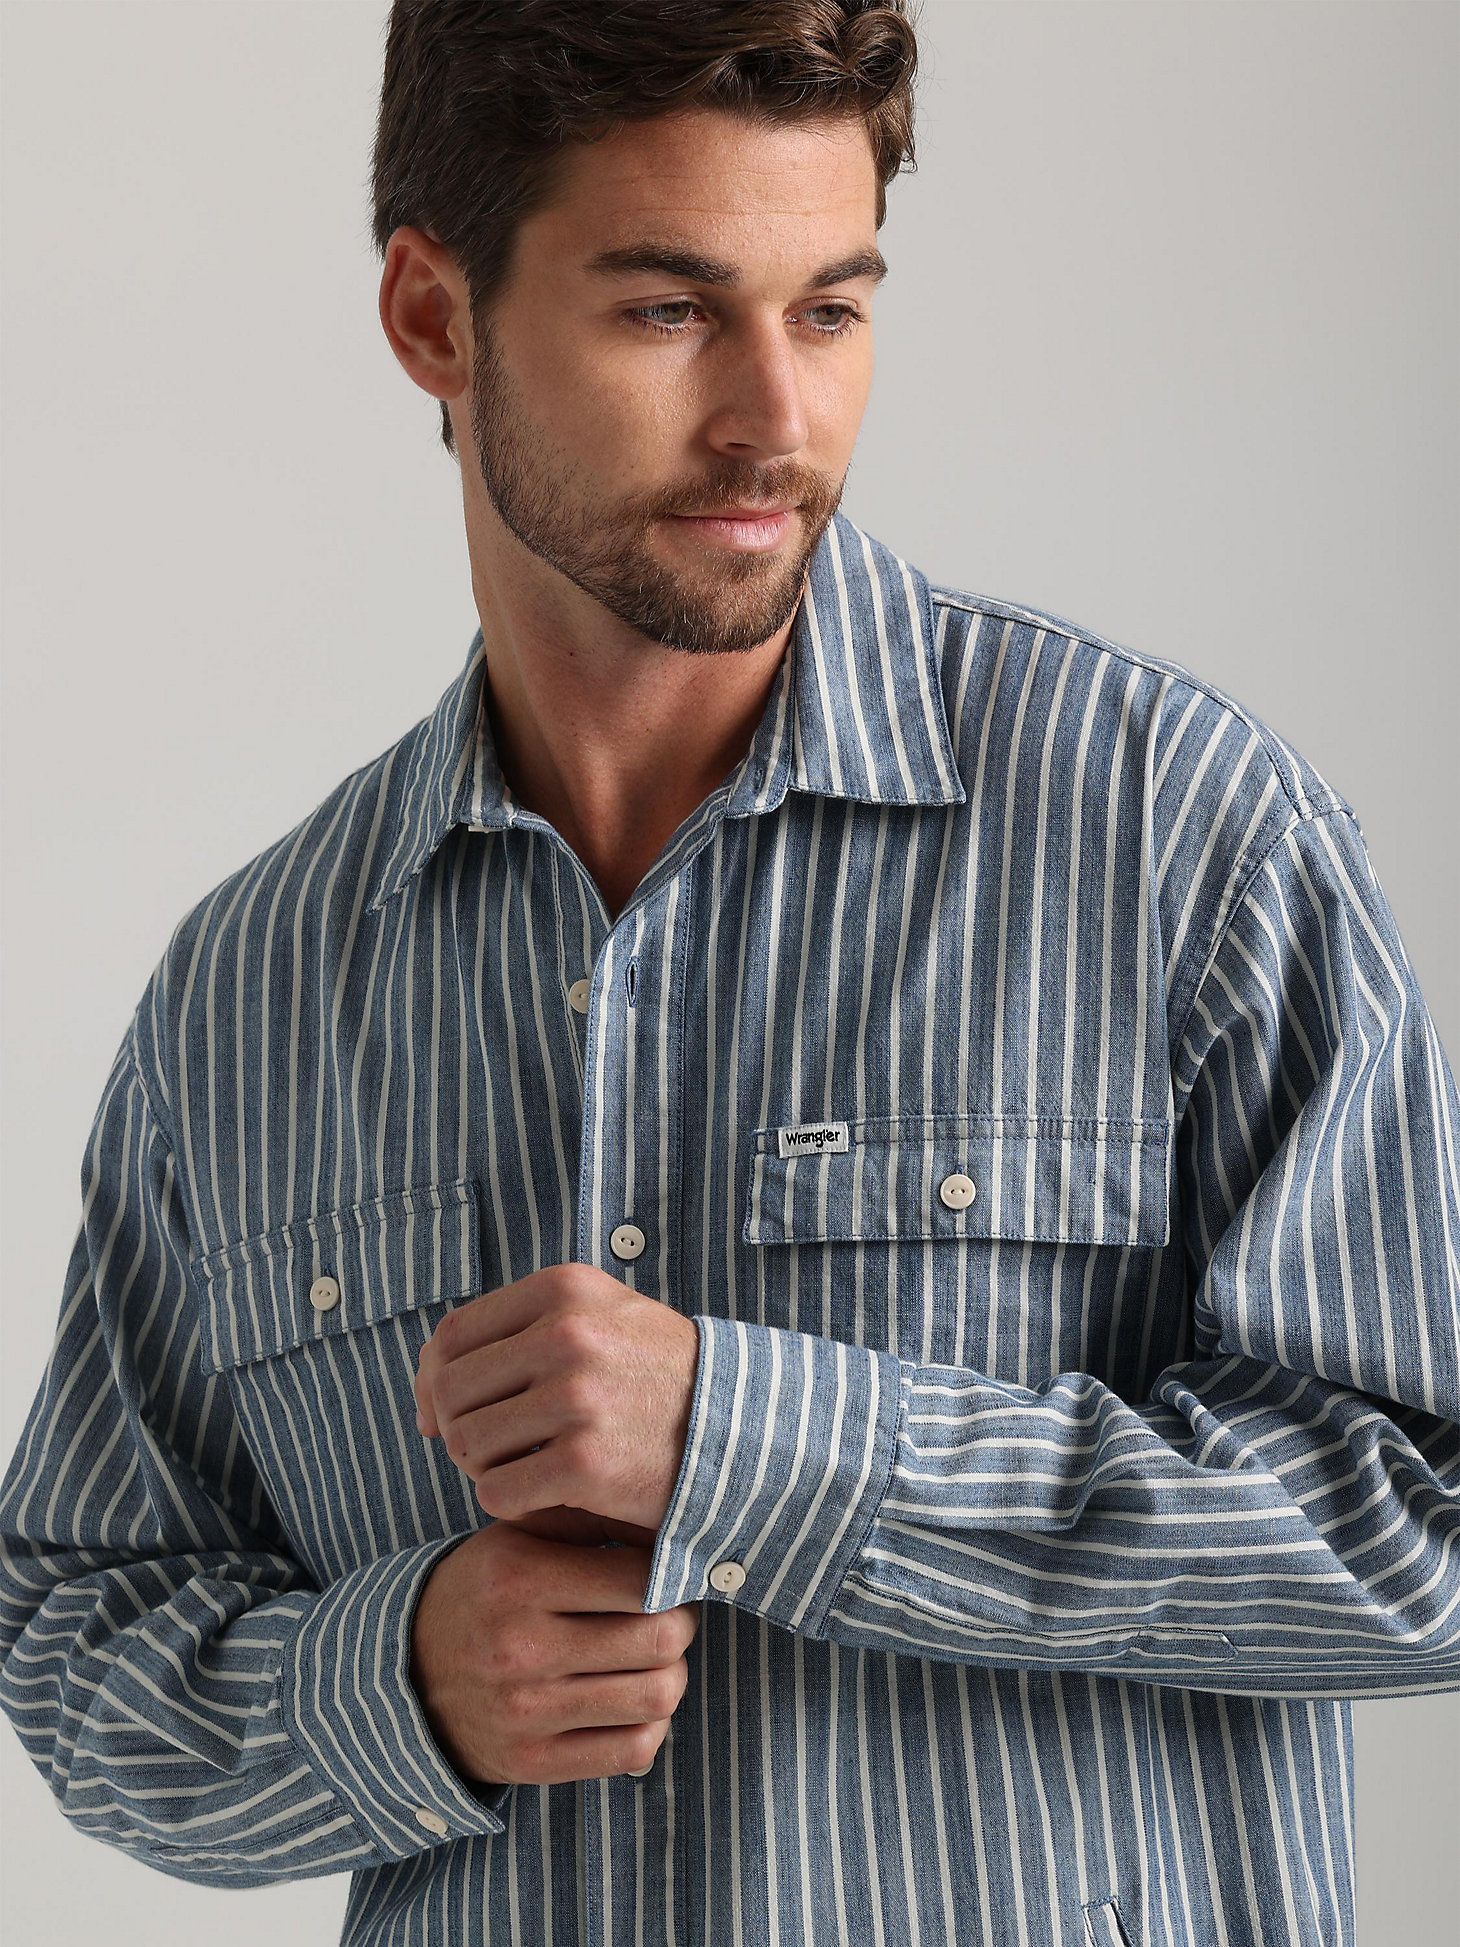 Men's Casey Jones Hickory Stripe Shirt in Hickory alternative view 4